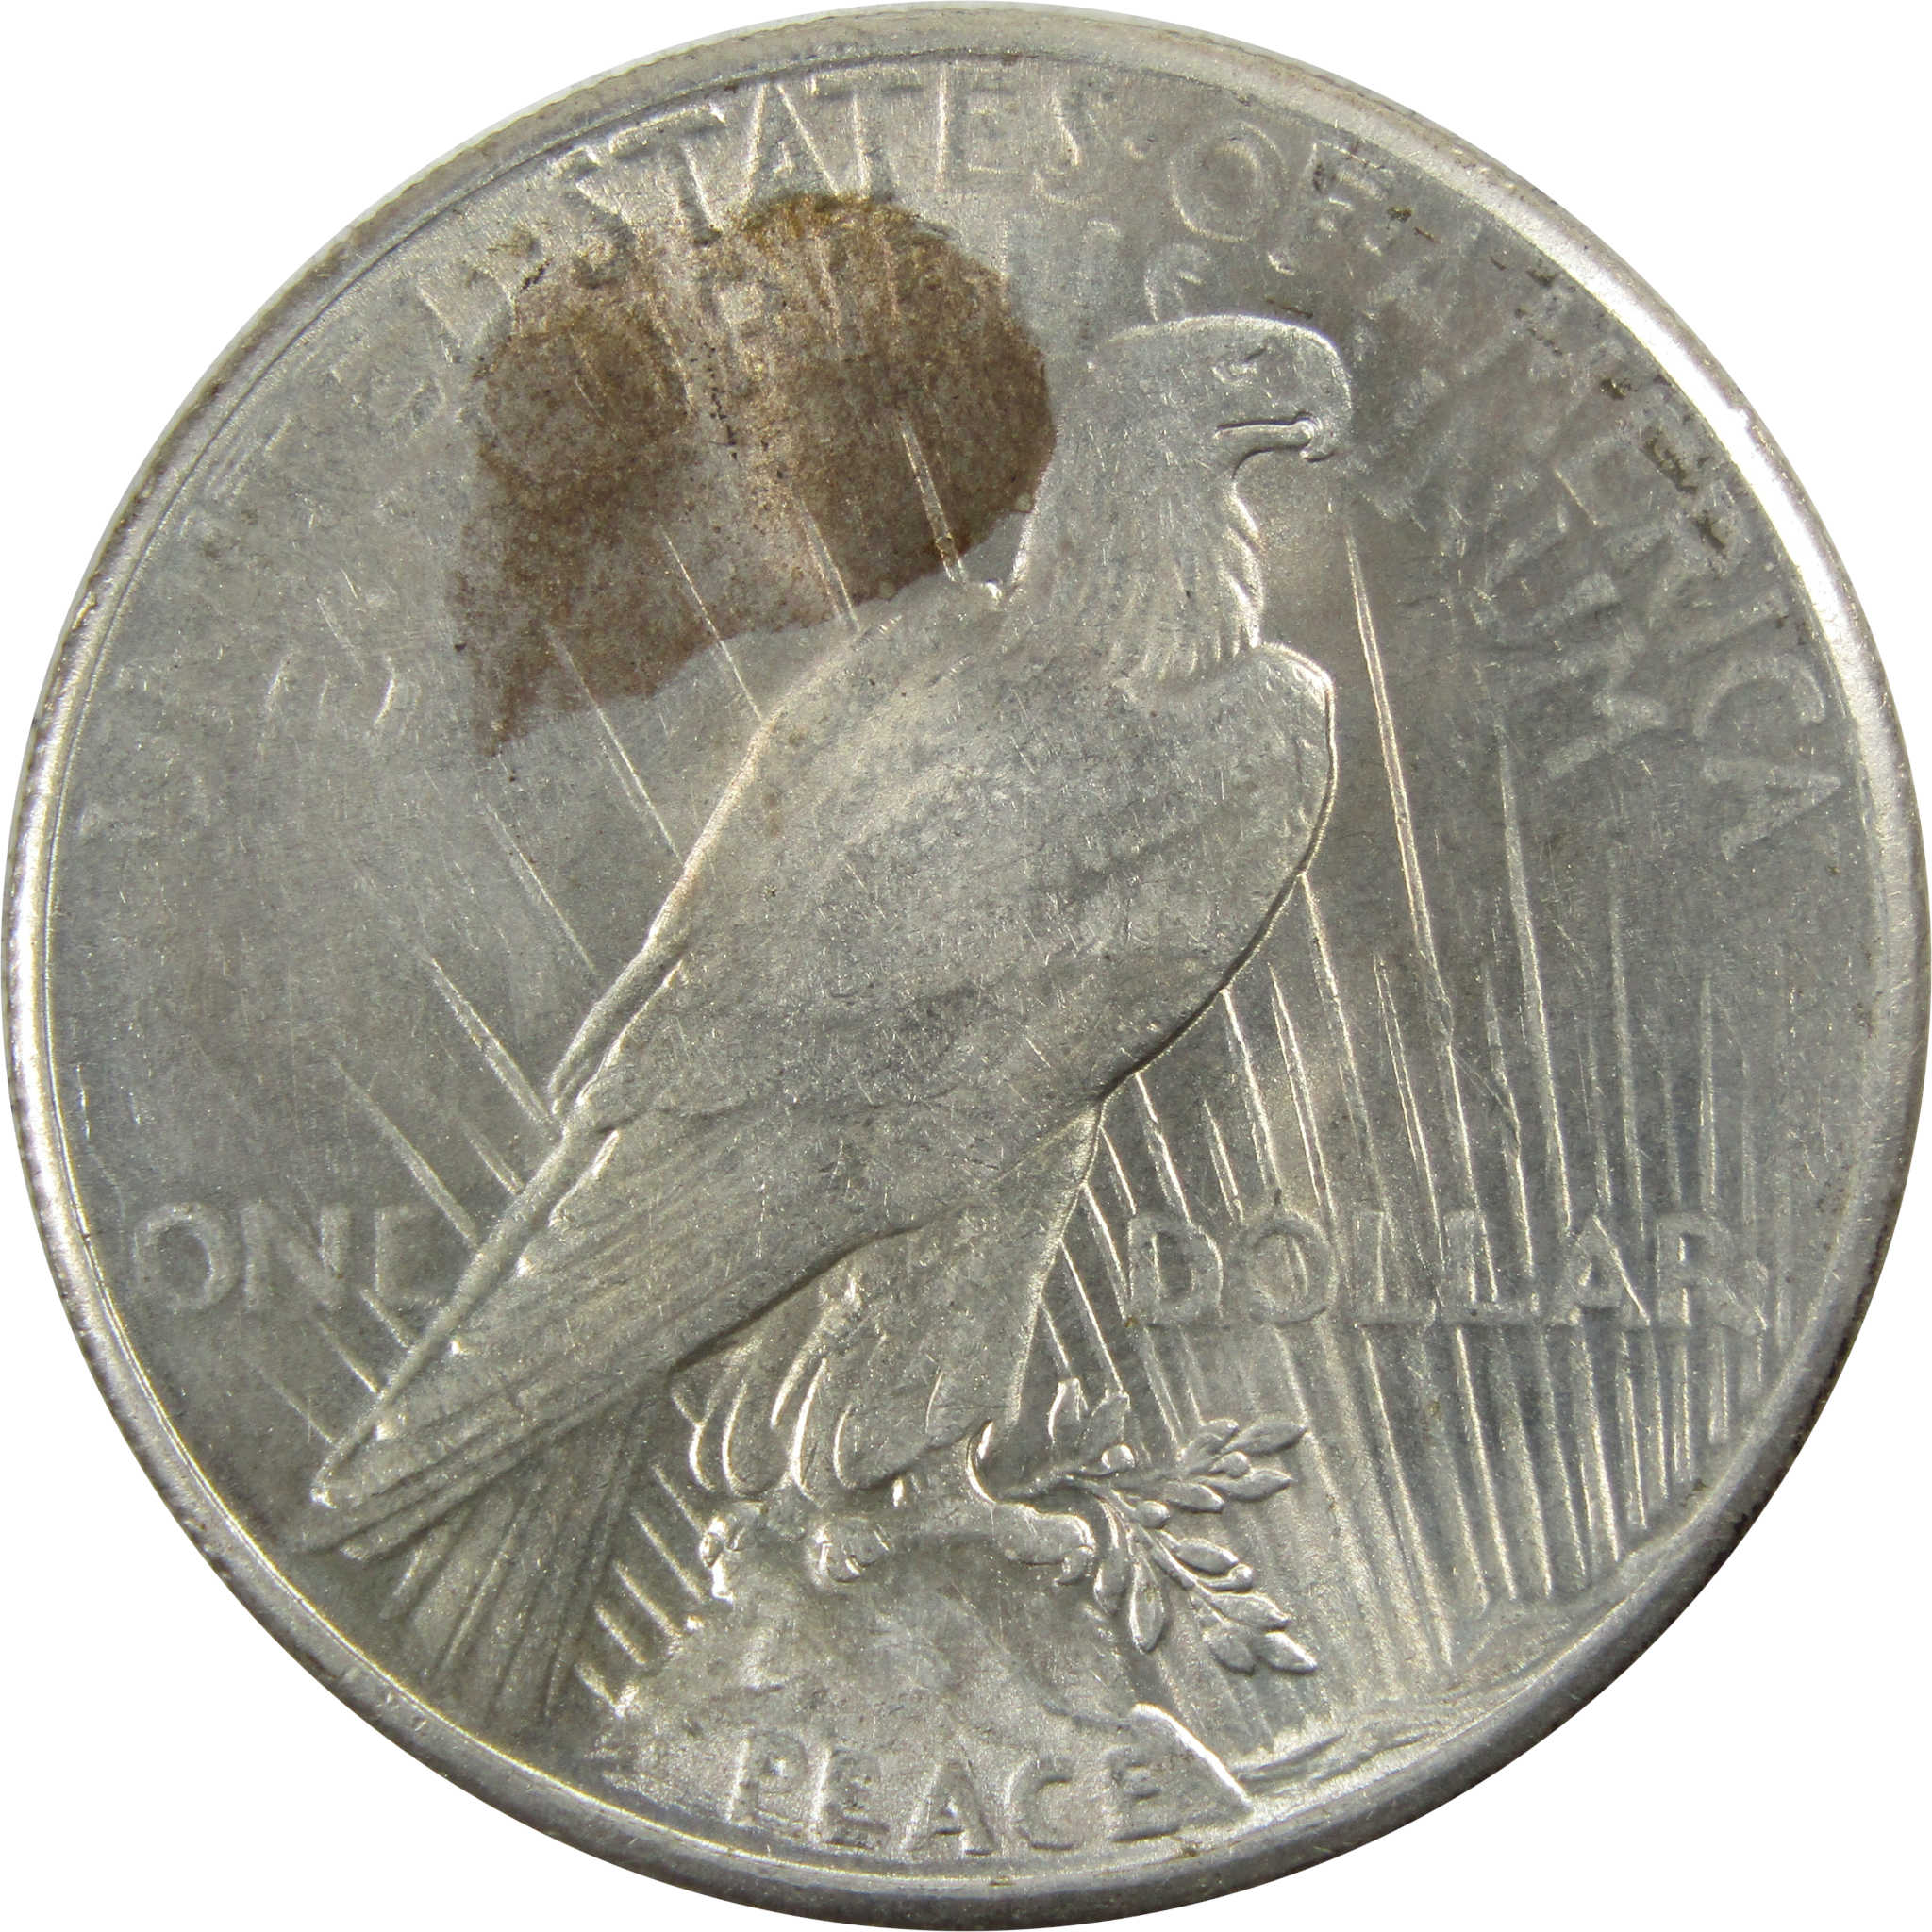 1926 Peace Dollar Borderline Uncirculated 90% Silver $1 Coin SKU:I5433